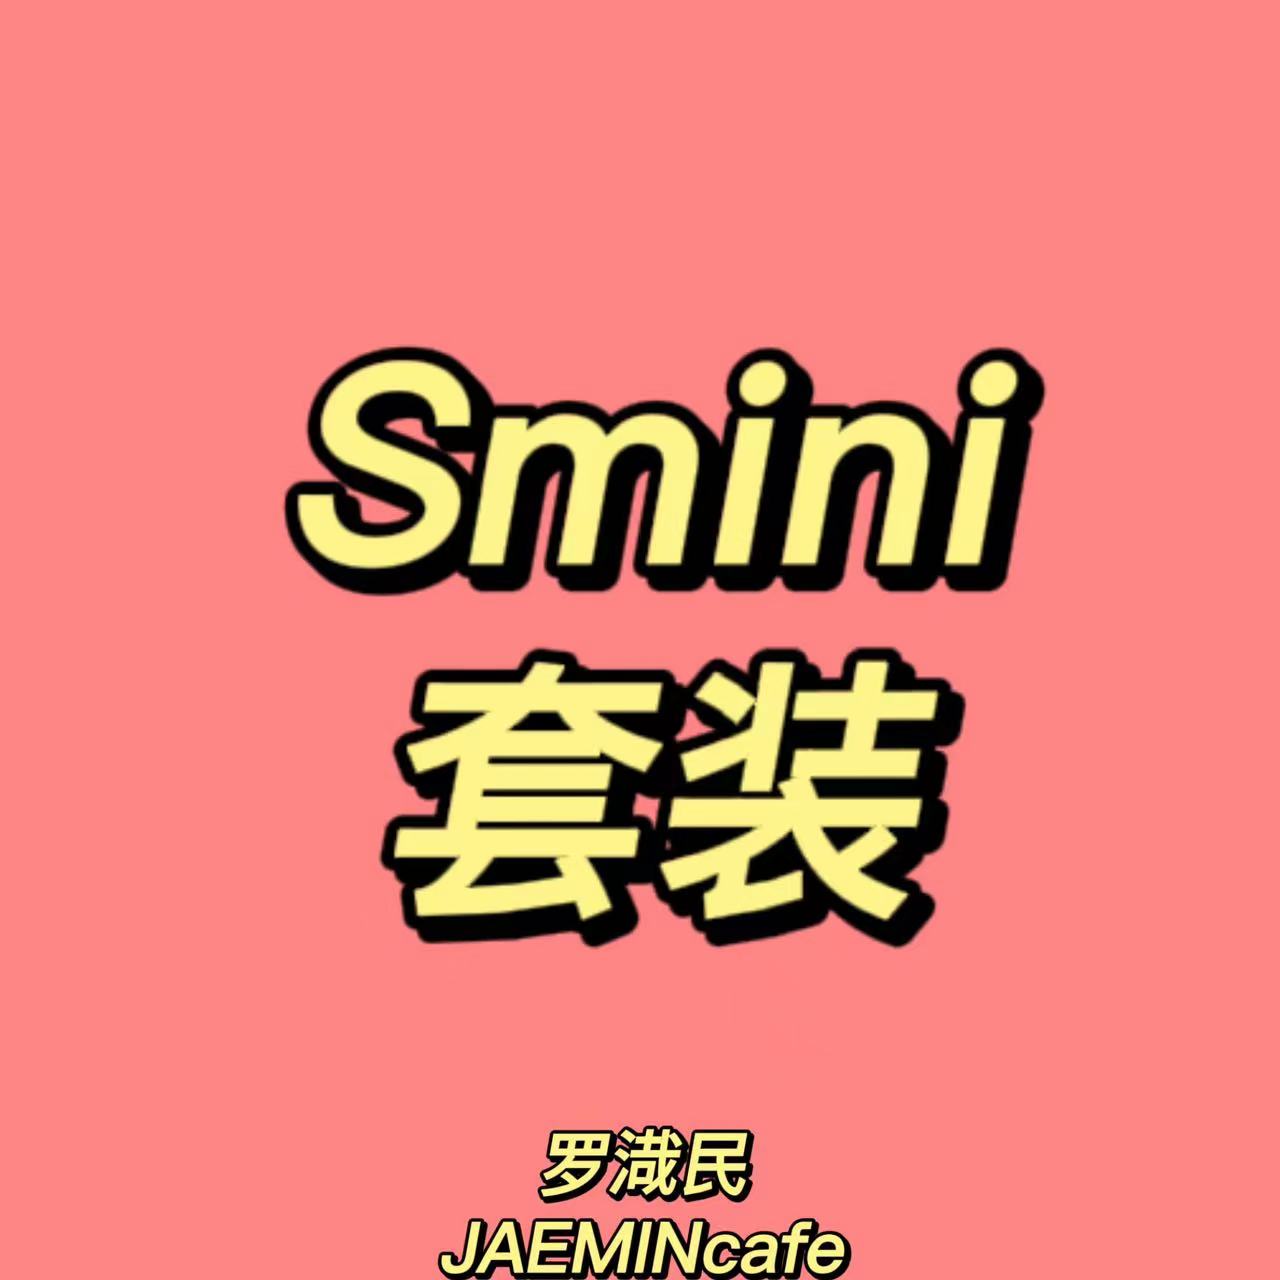 [全款 裸专] [7CD 套装] NCT DREAM - 正规3辑 [ISTJ] (SMini Ver.) (Smart Album)_罗渽民吧